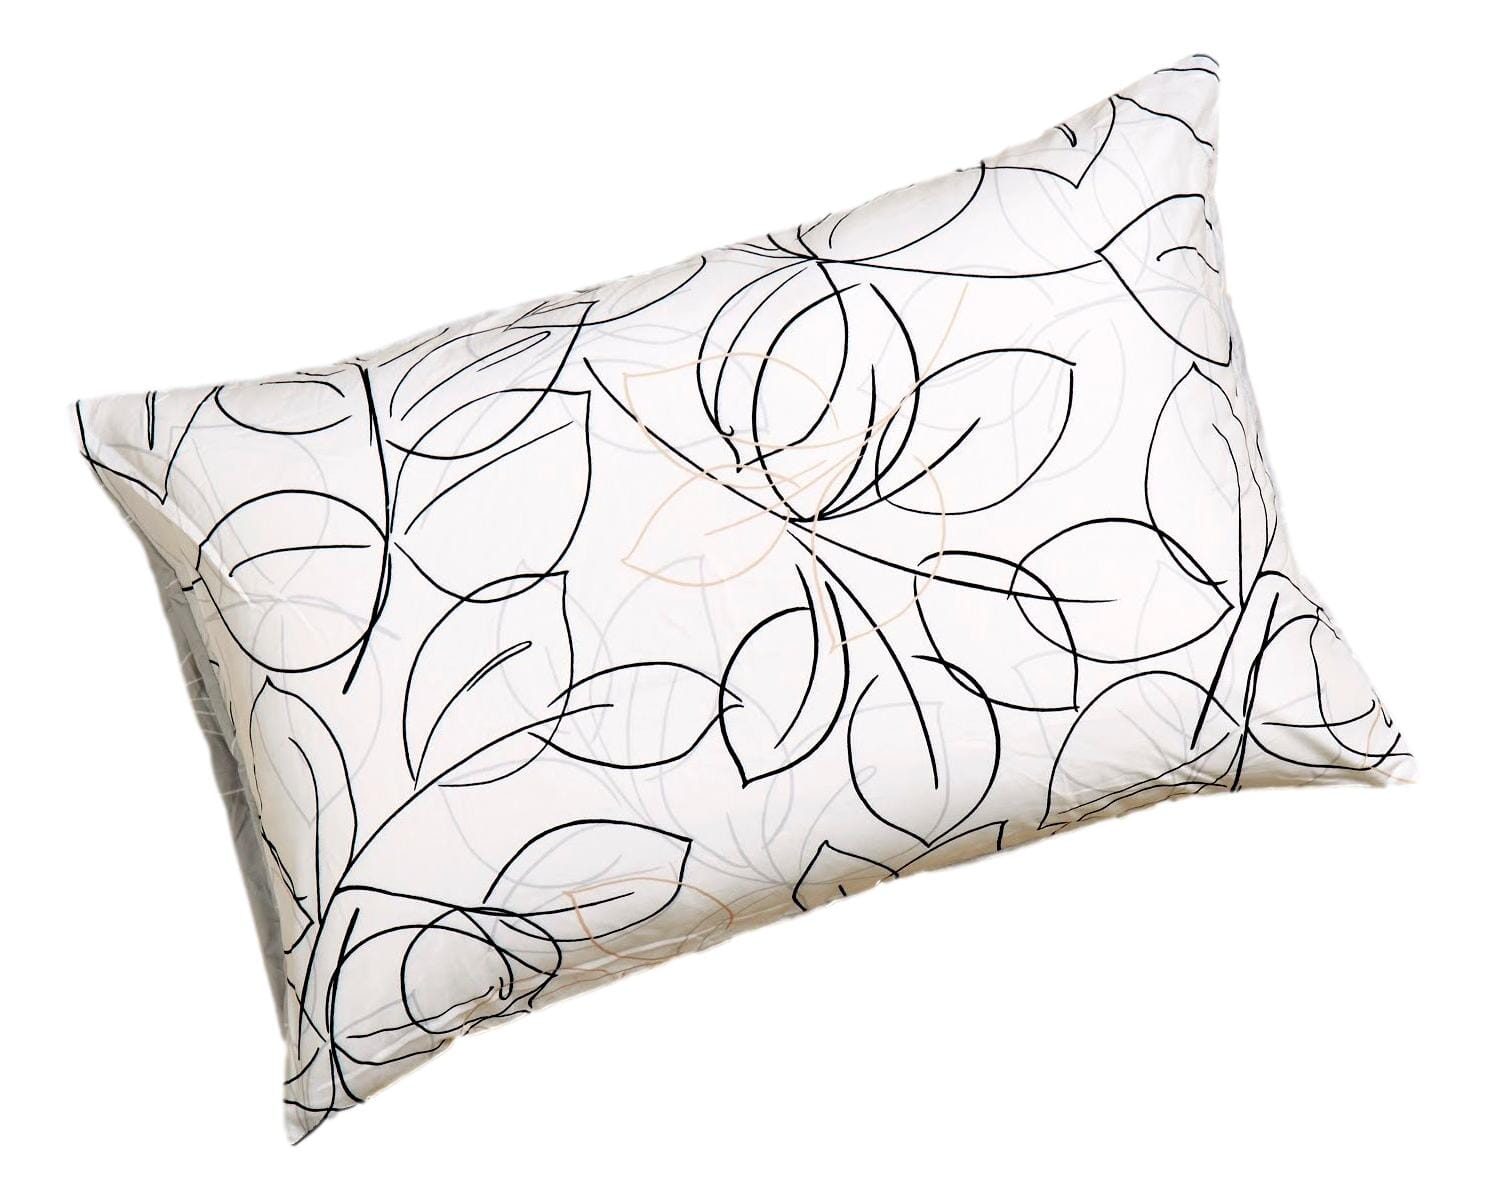 Tache Modern Abstract Leaf Line Art Foliage White Grey Black Gold Pillowcases (TJ3571) - Tache Home Fashion